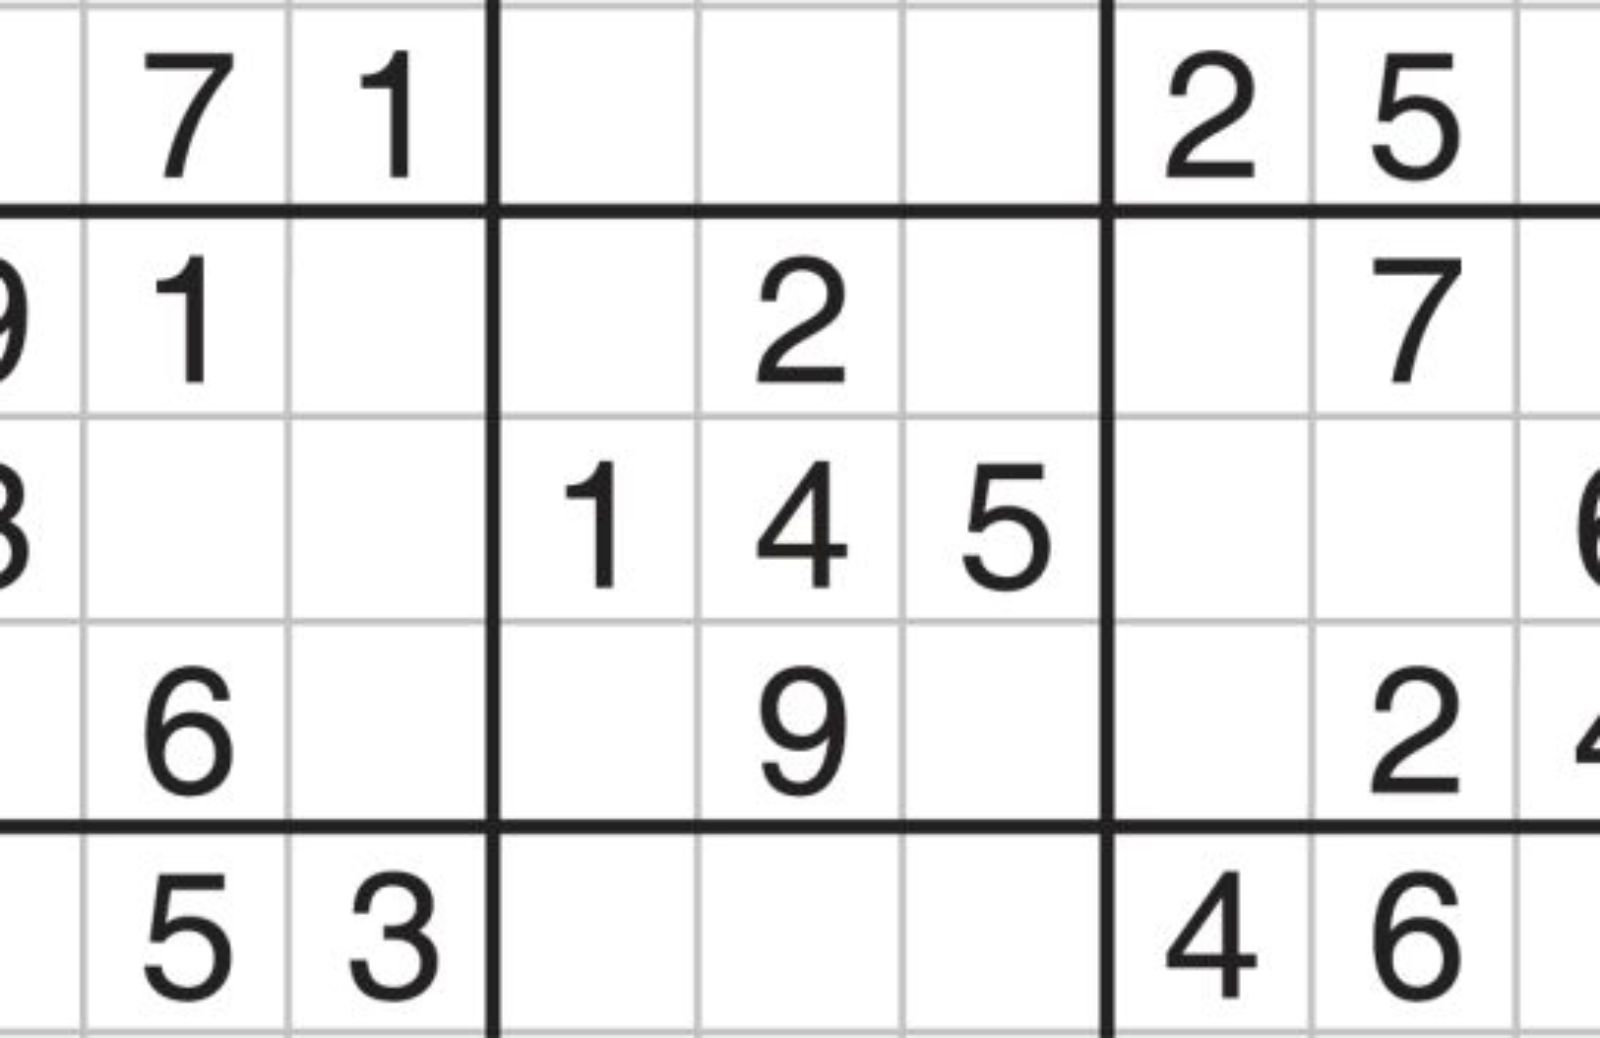 Come si gioca a Sudoku